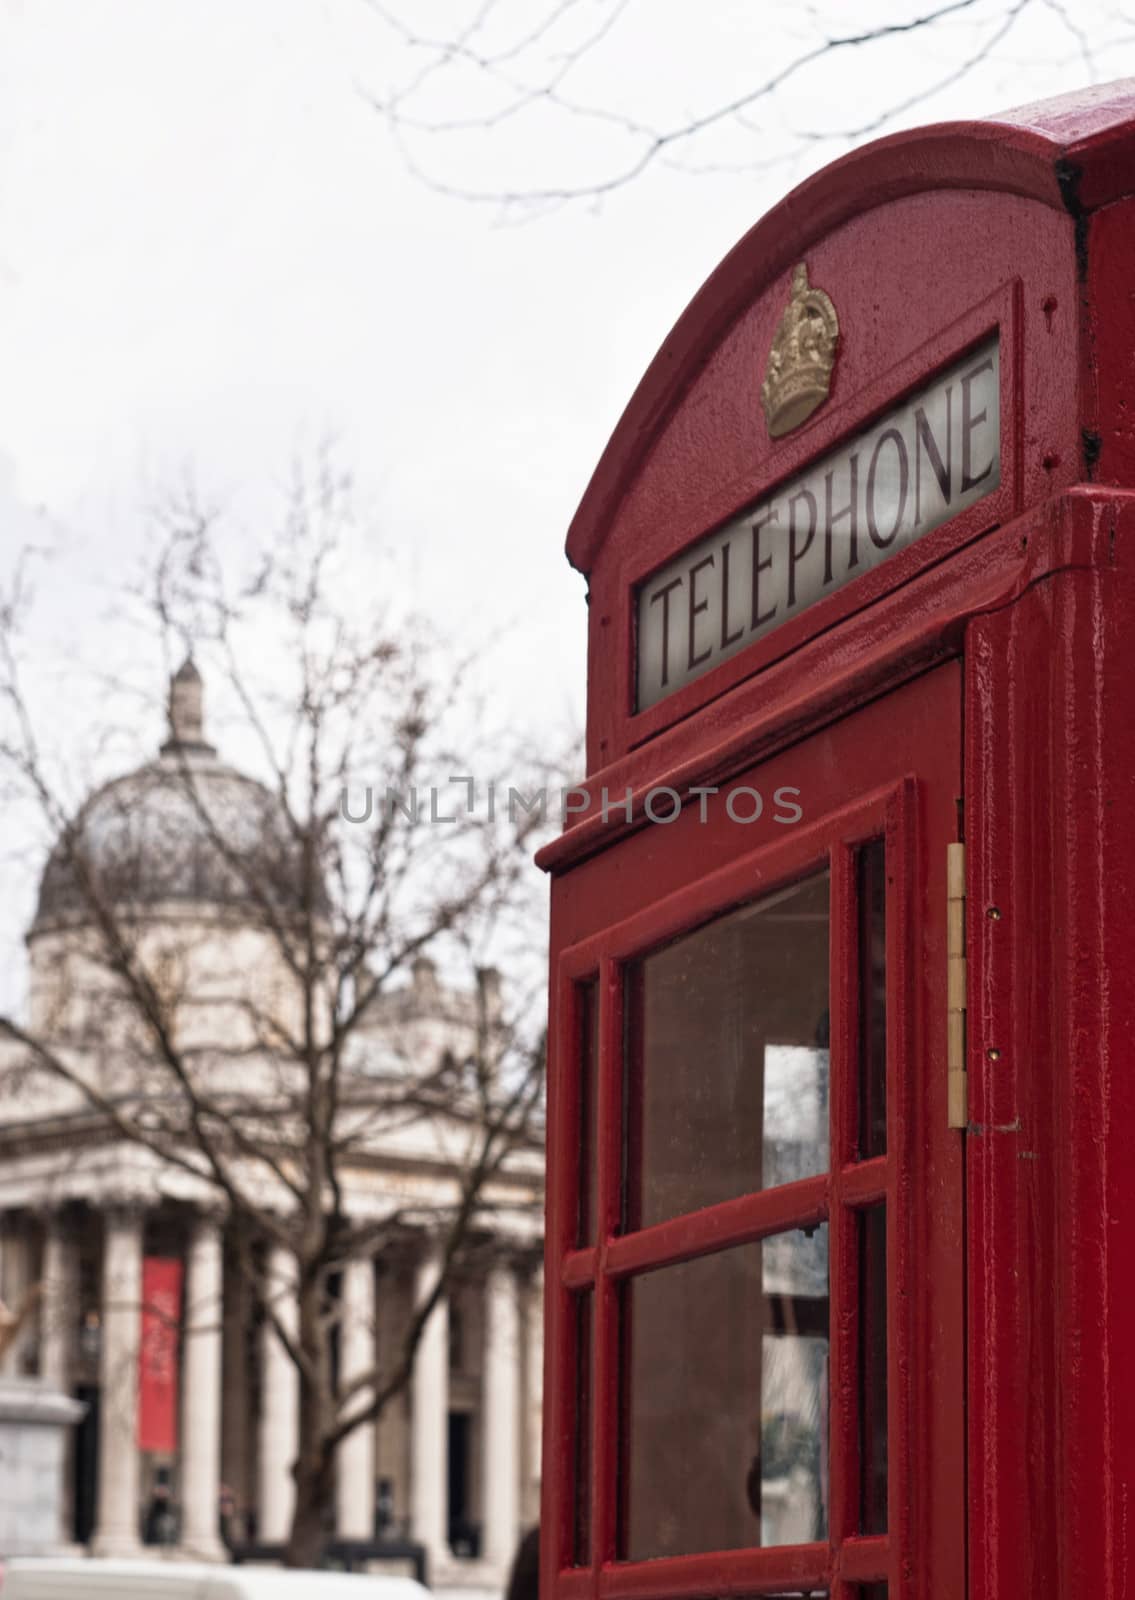  national gallery and red public phone by gandolfocannatella